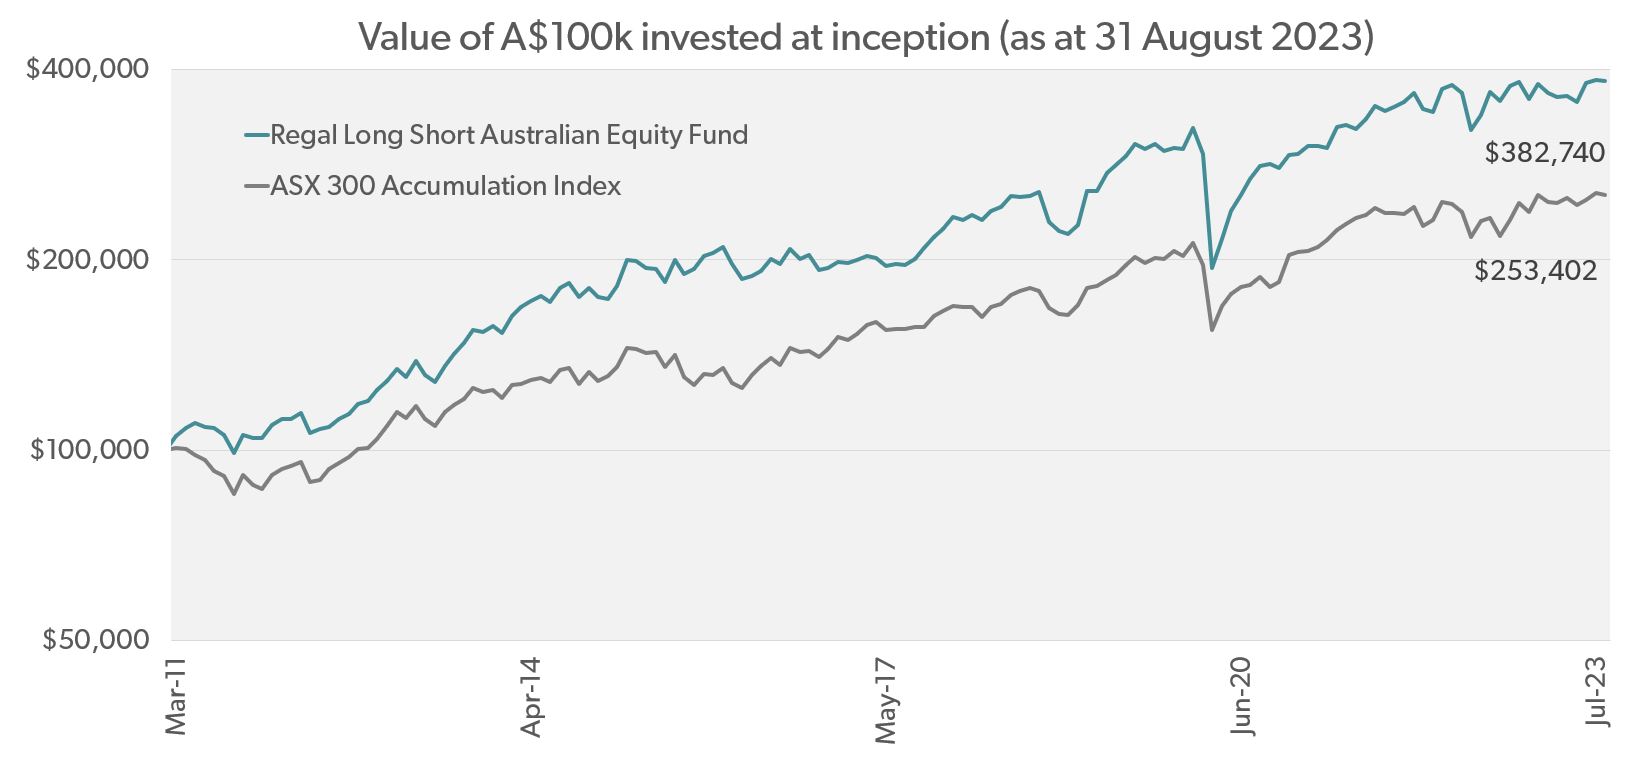 Regal Long Short Australian Equity Fund